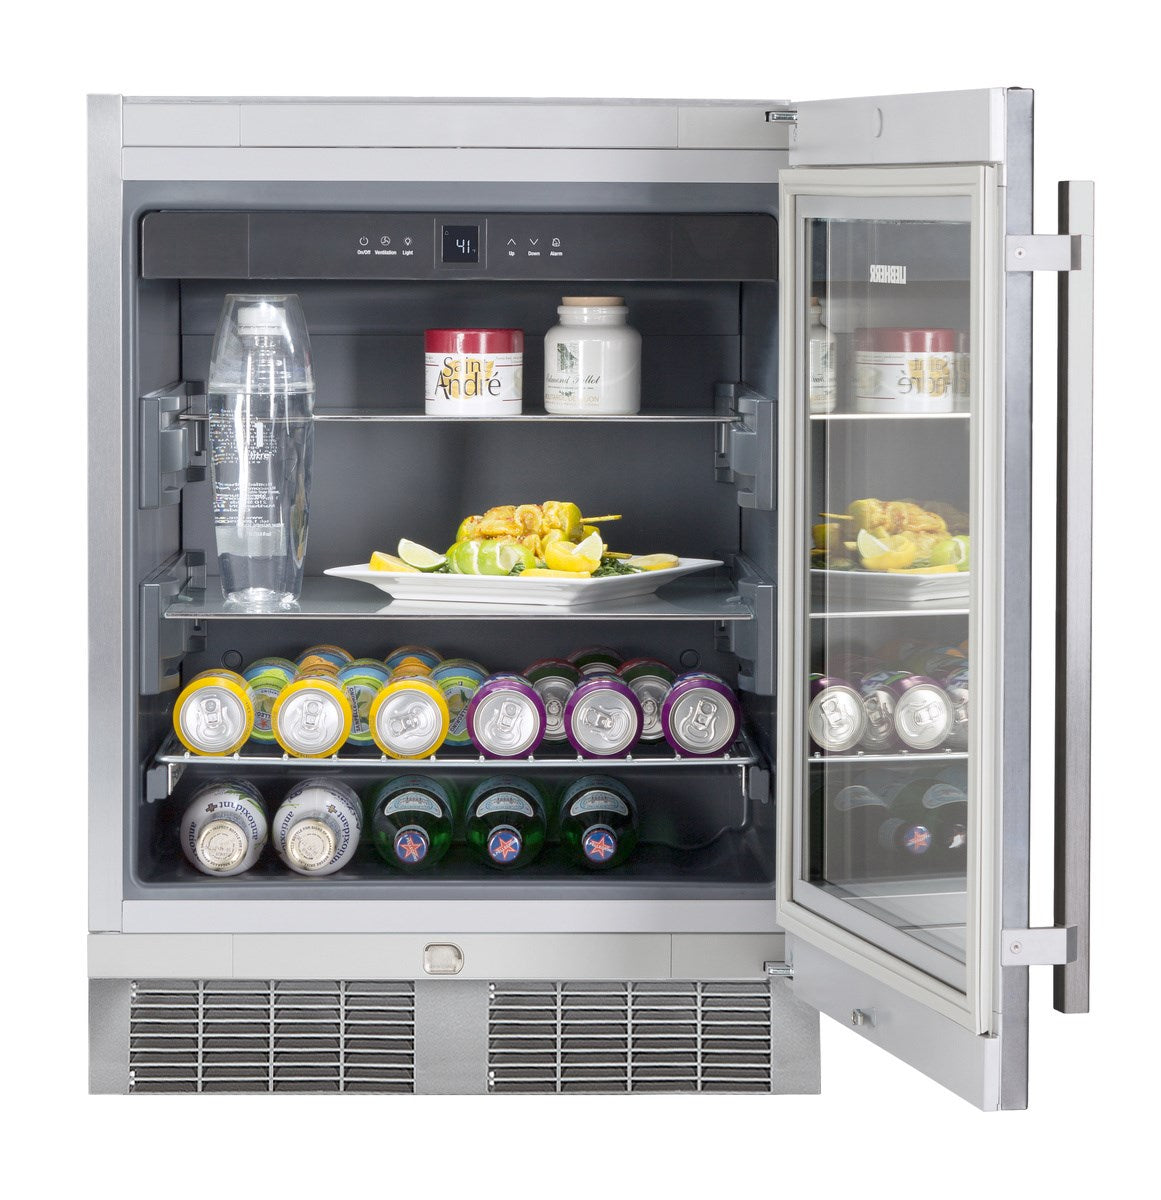 Liebherr - 23.5625 Inch 3.8 cu. ft Built In / Integrated Beverage Centre Refrigerator in Stainless - RU510